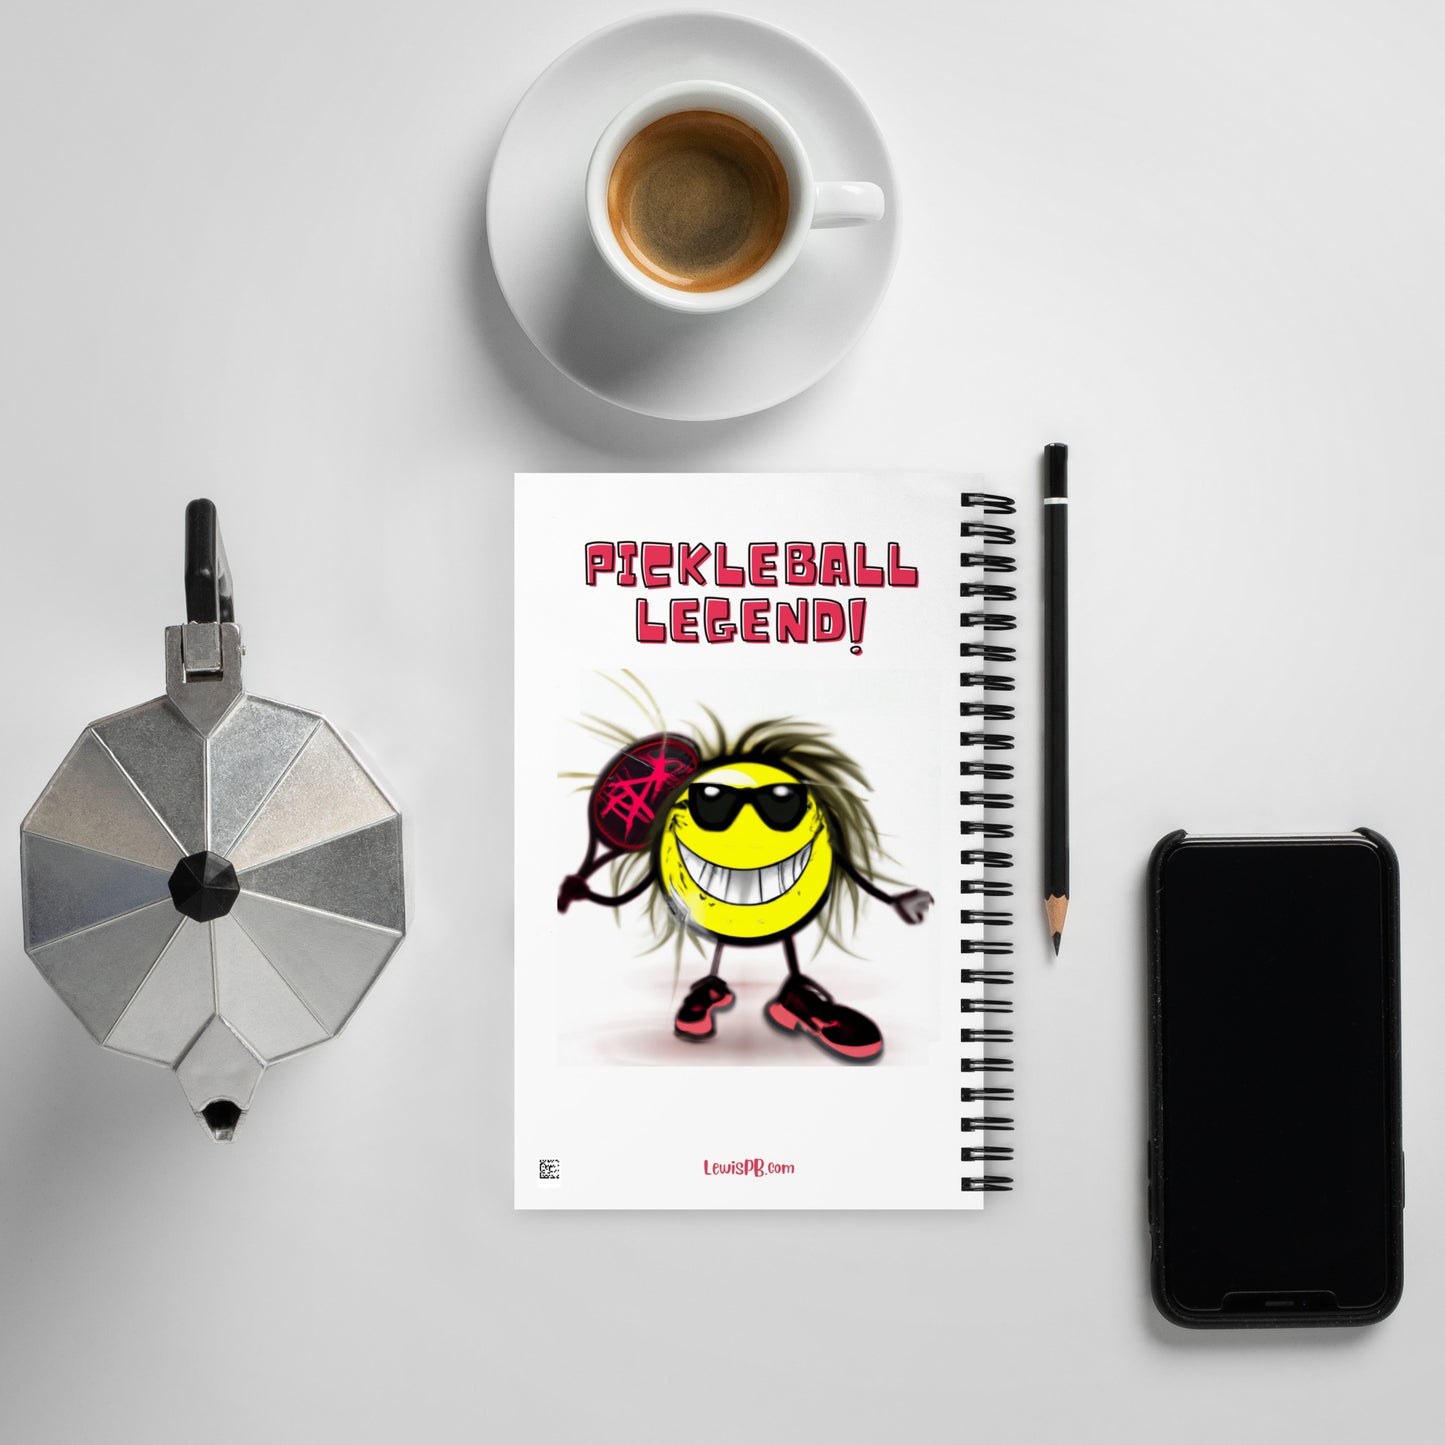 Pickleball Spiral Notebook | "Pickleball Legend"